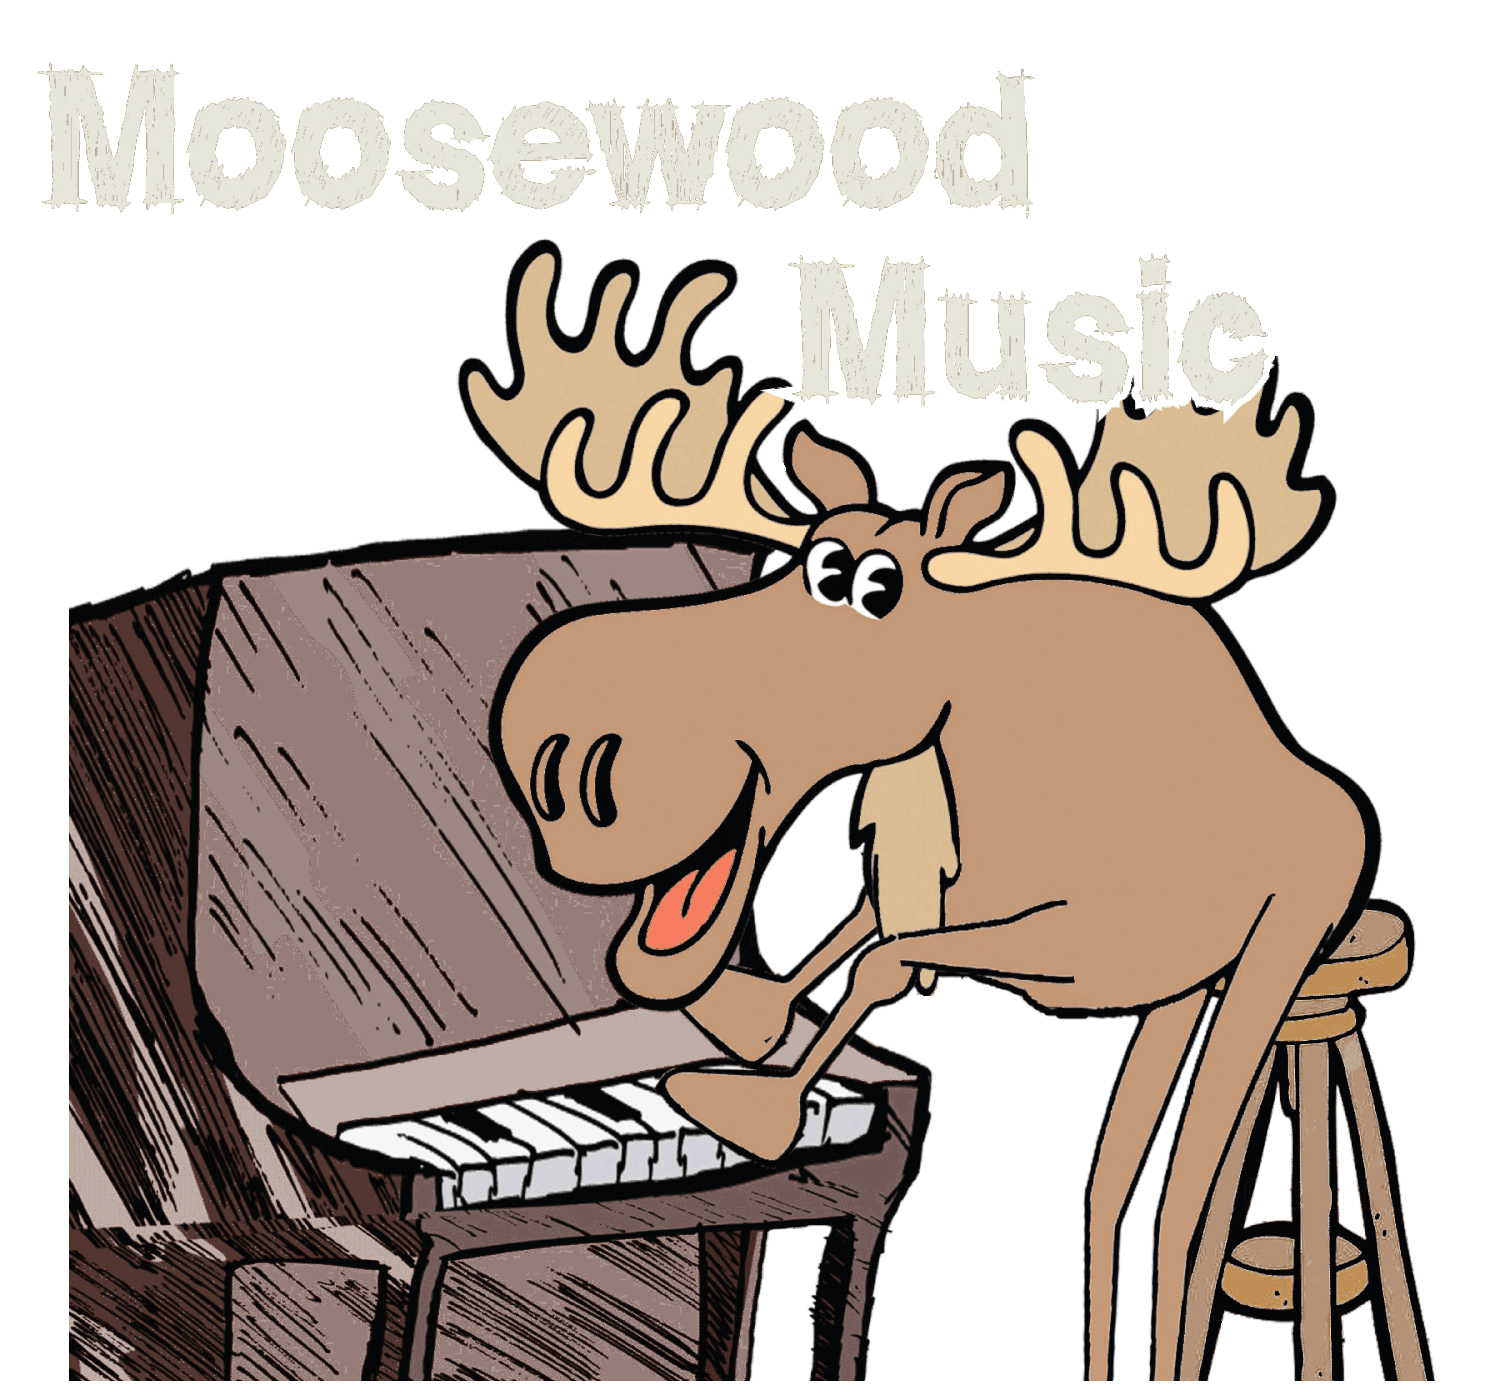 Moosewood Music